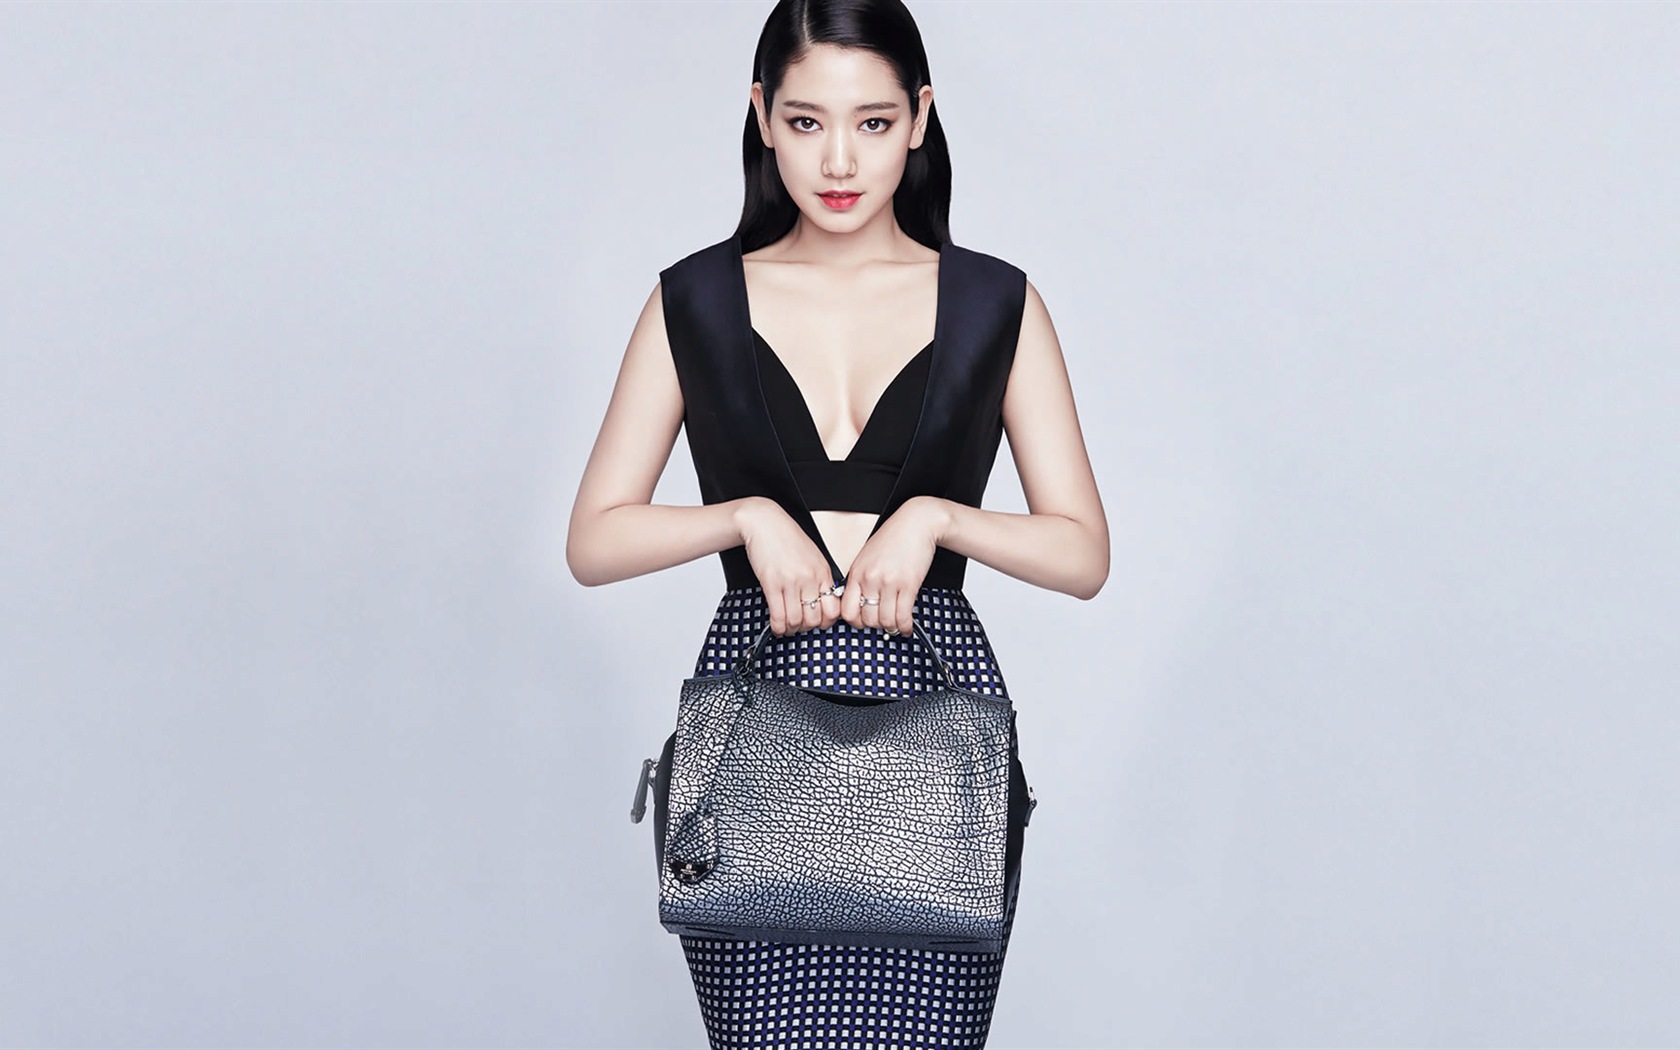 South Korean actress Park Shin Hye HD Wallpapers #2 - 1680x1050